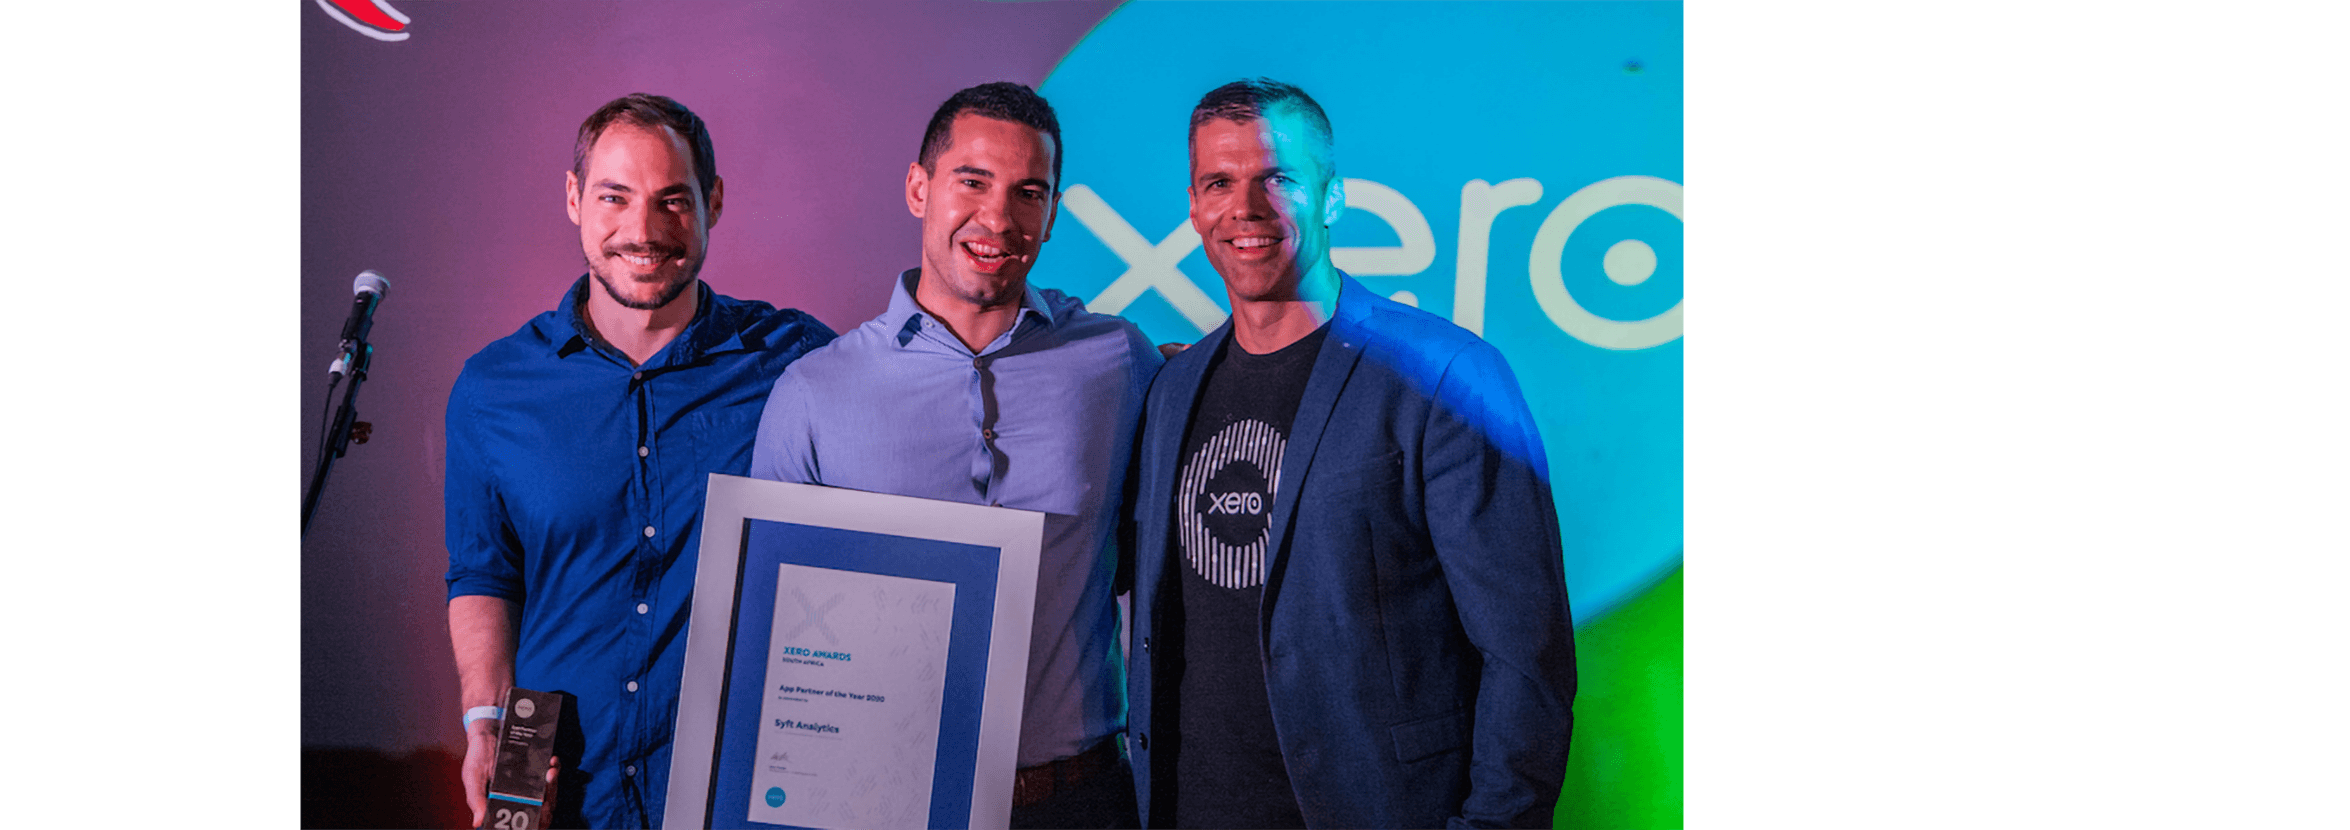 Members of the Syft Analytics team celebrate winning the App Partner of the Year award.